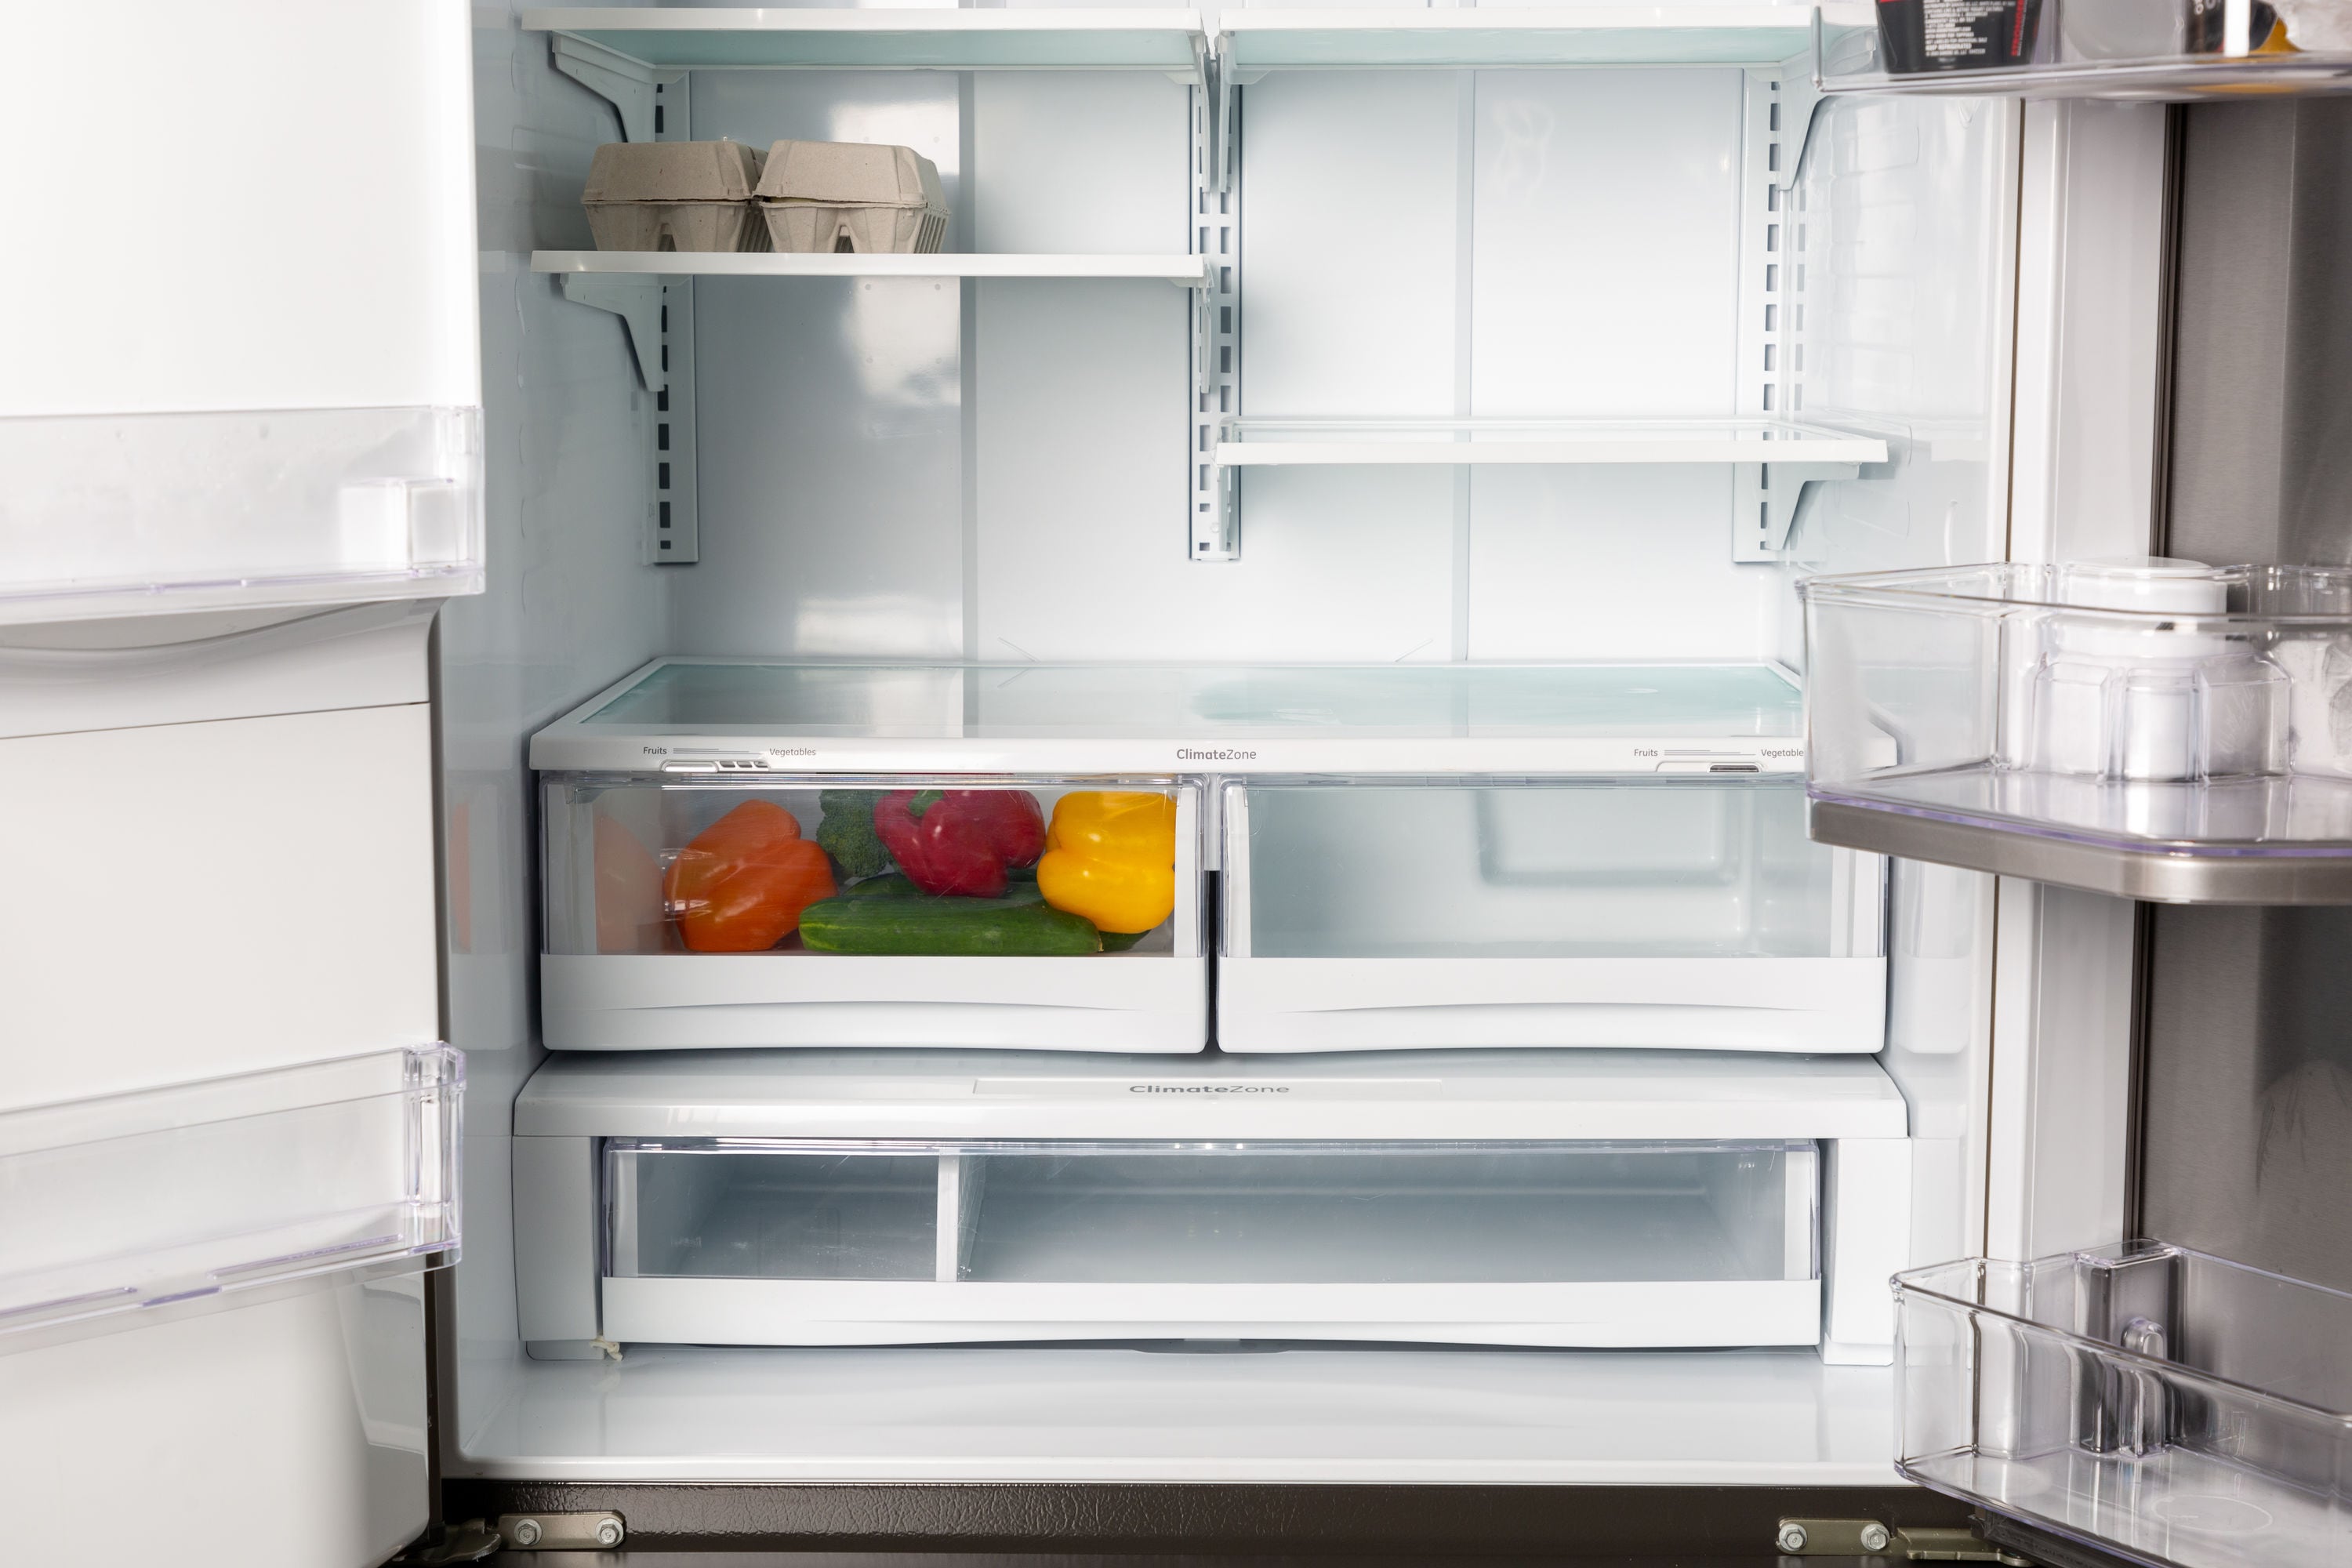  Refrigerator Parts & Accessories - Refrigerator Parts